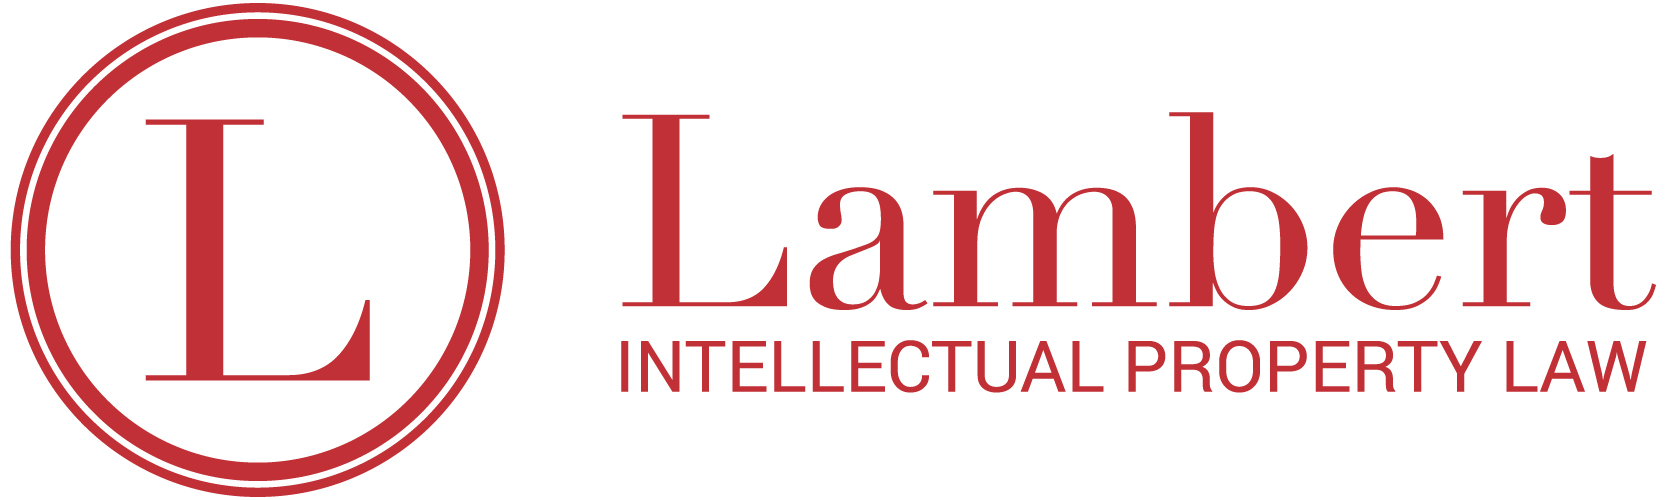 Lambert Intellection Property Law